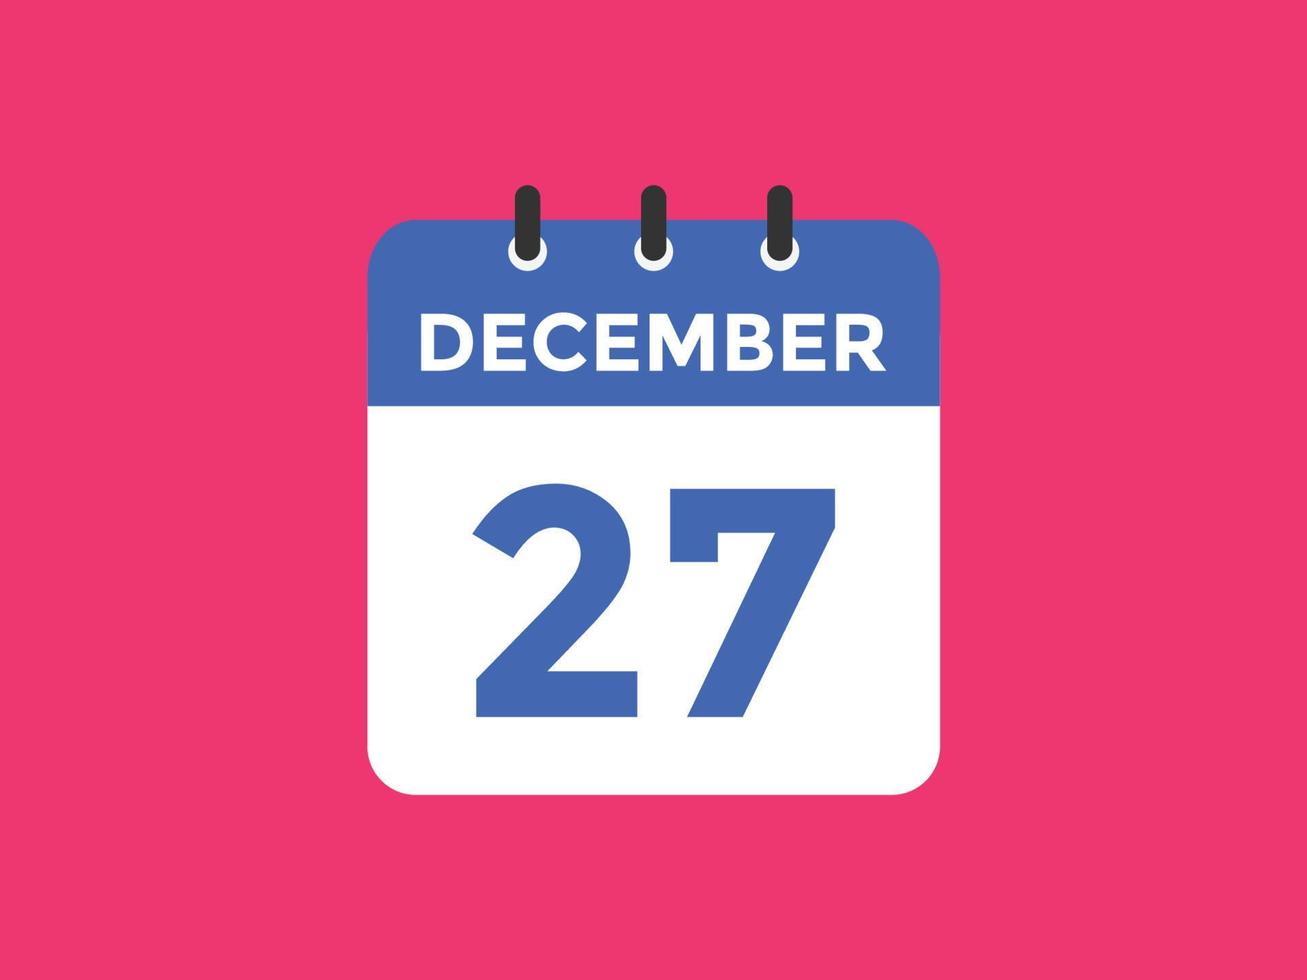 december 27 calendar reminder. 27th december daily calendar icon template. Calendar 27th december icon Design template. Vector illustration